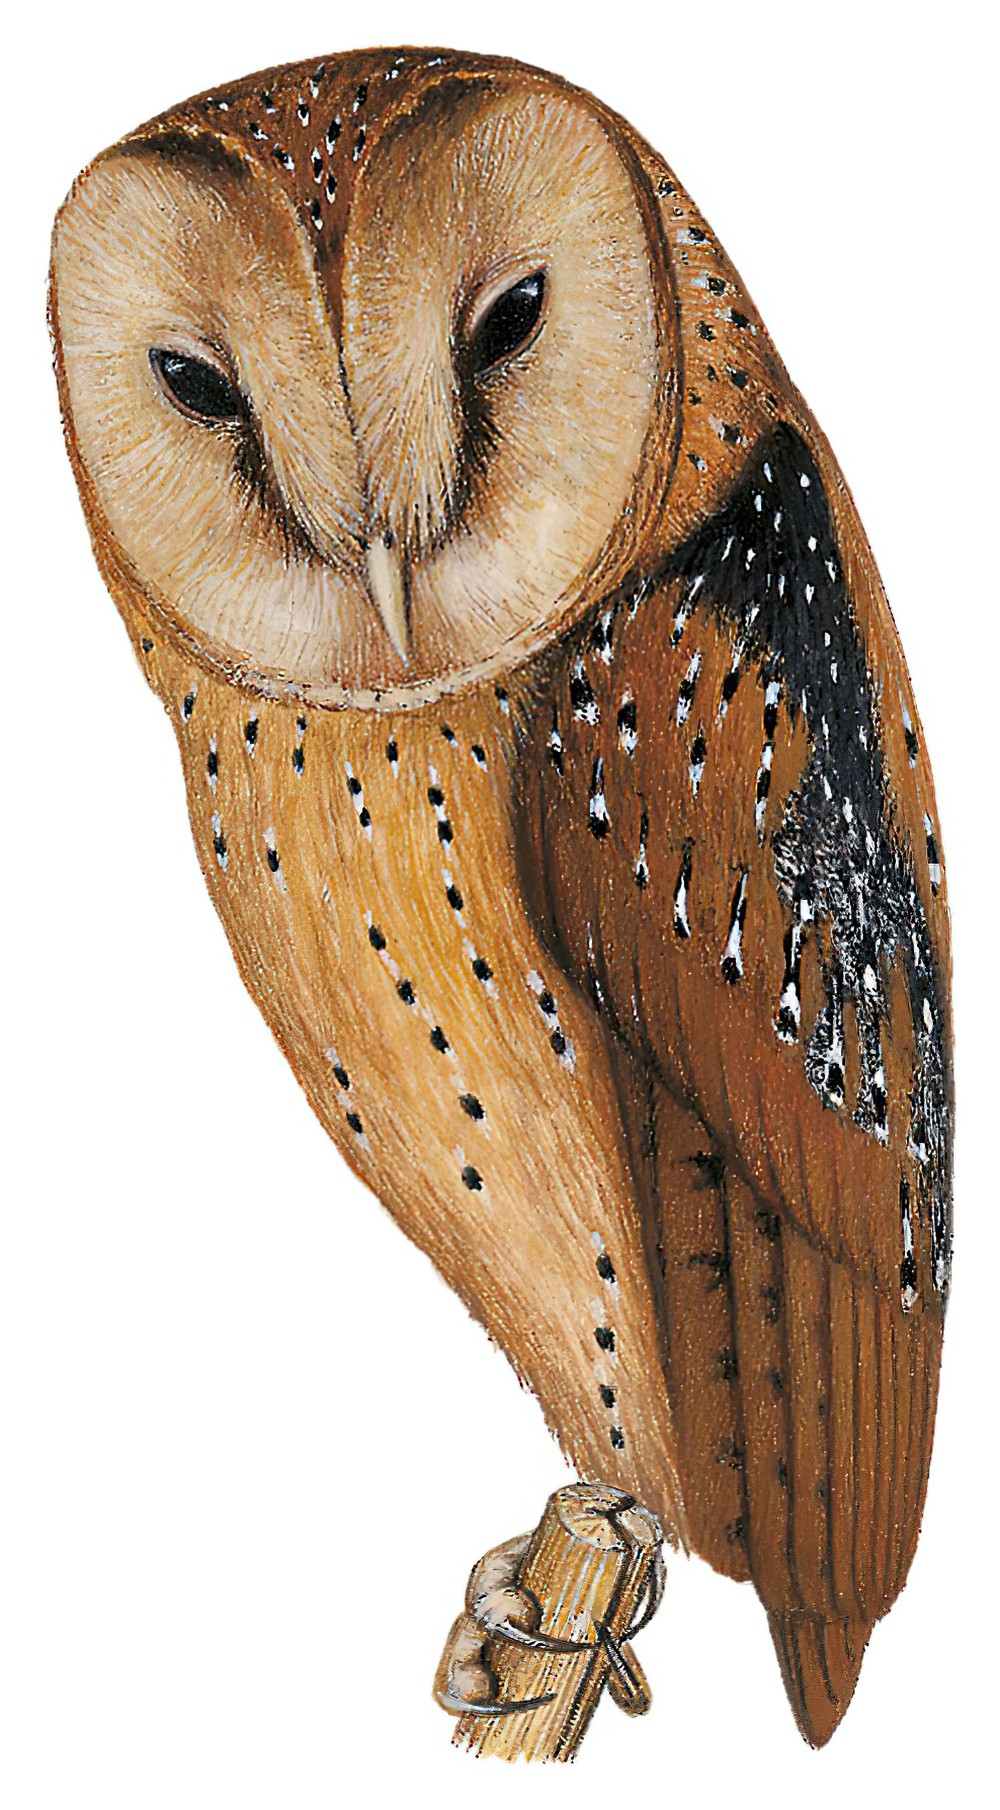 Congo Bay-Owl / Phodilus prigoginei